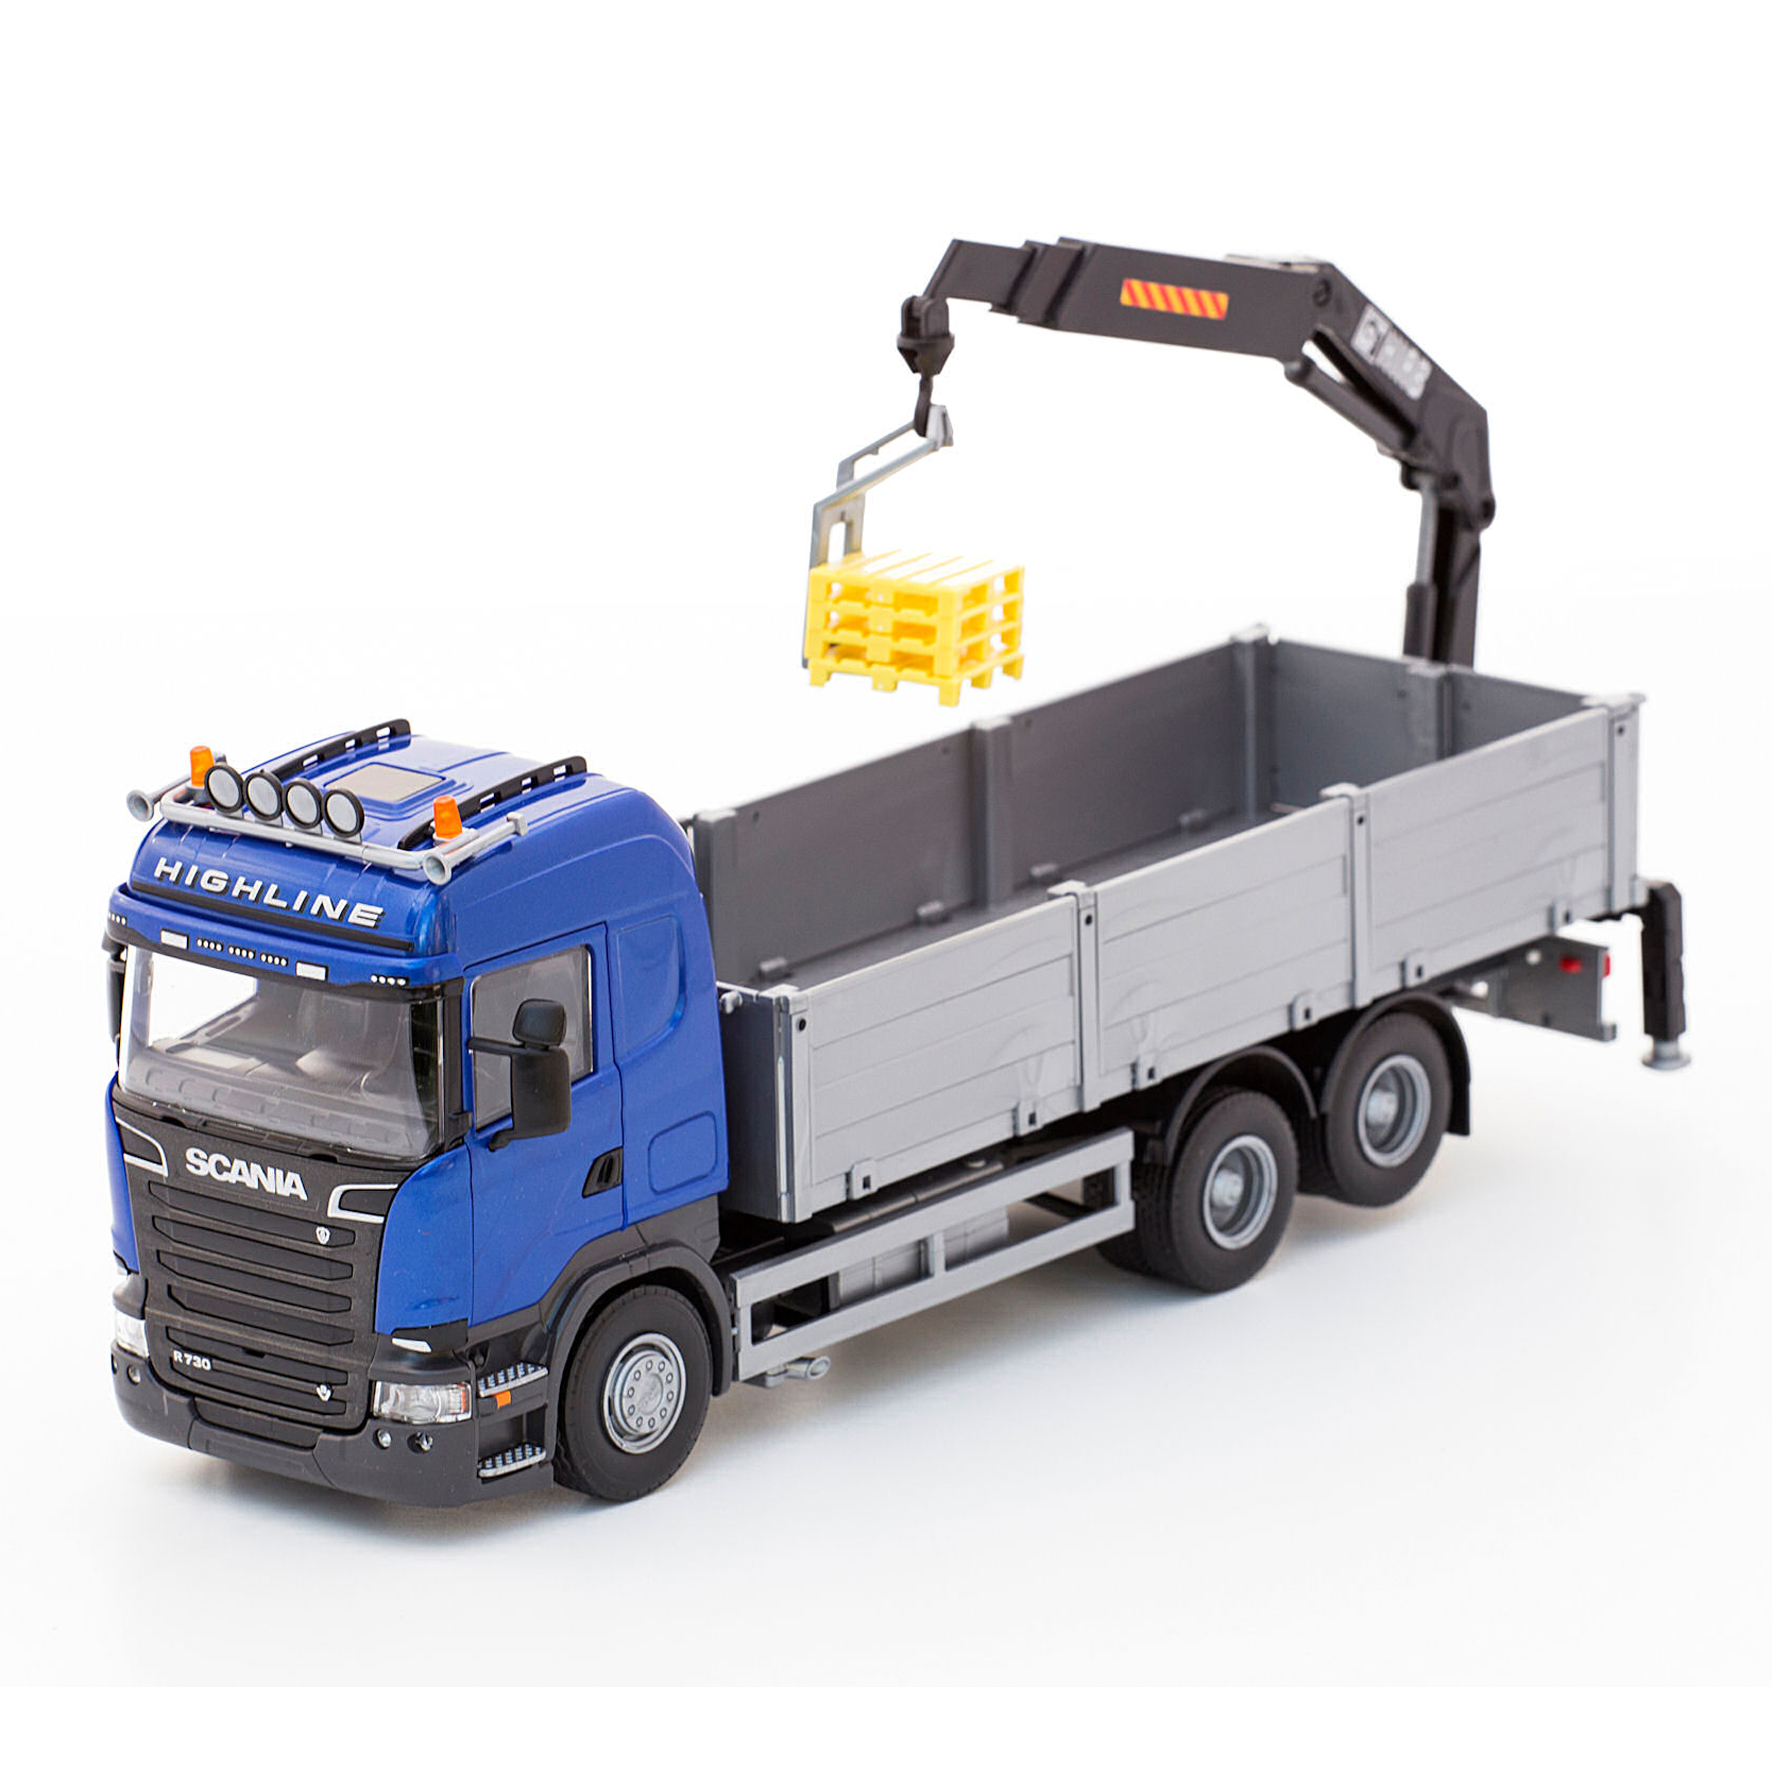 Work Vehicles emek toy car truck scania blue 1:25